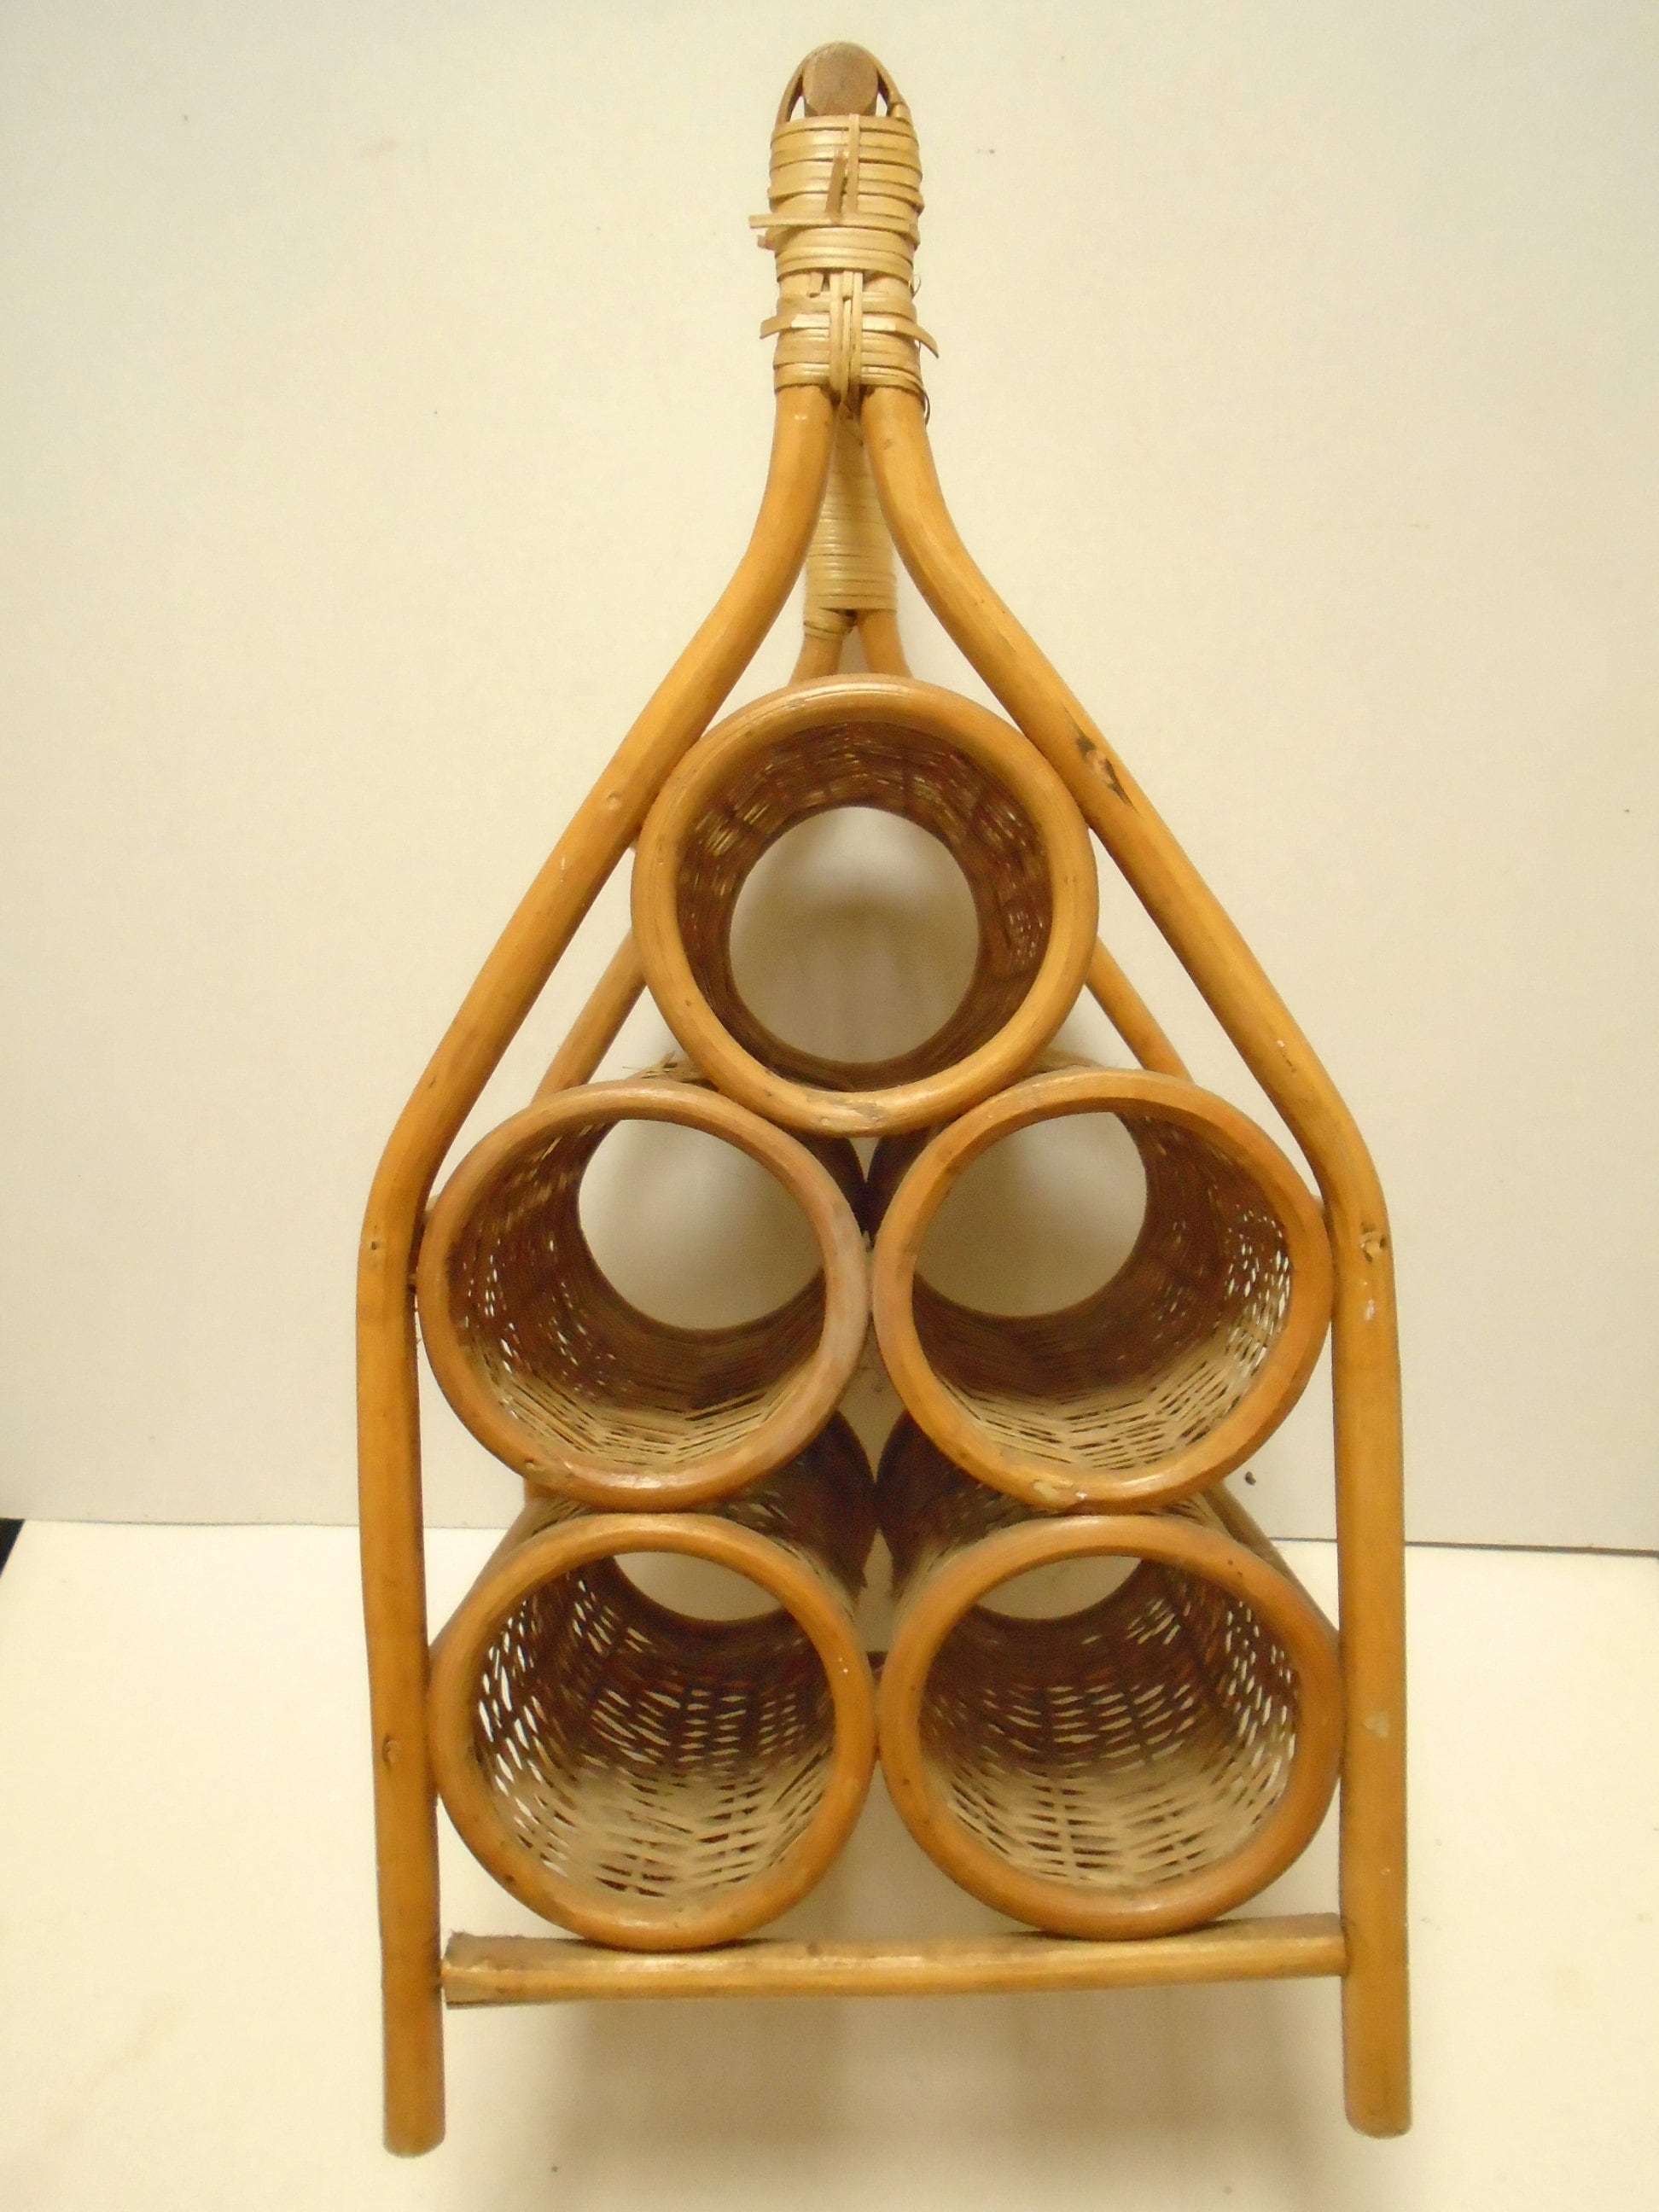 Botellero vintage de madera para 18 botellas, forma redonda, apilable para  vino de piso